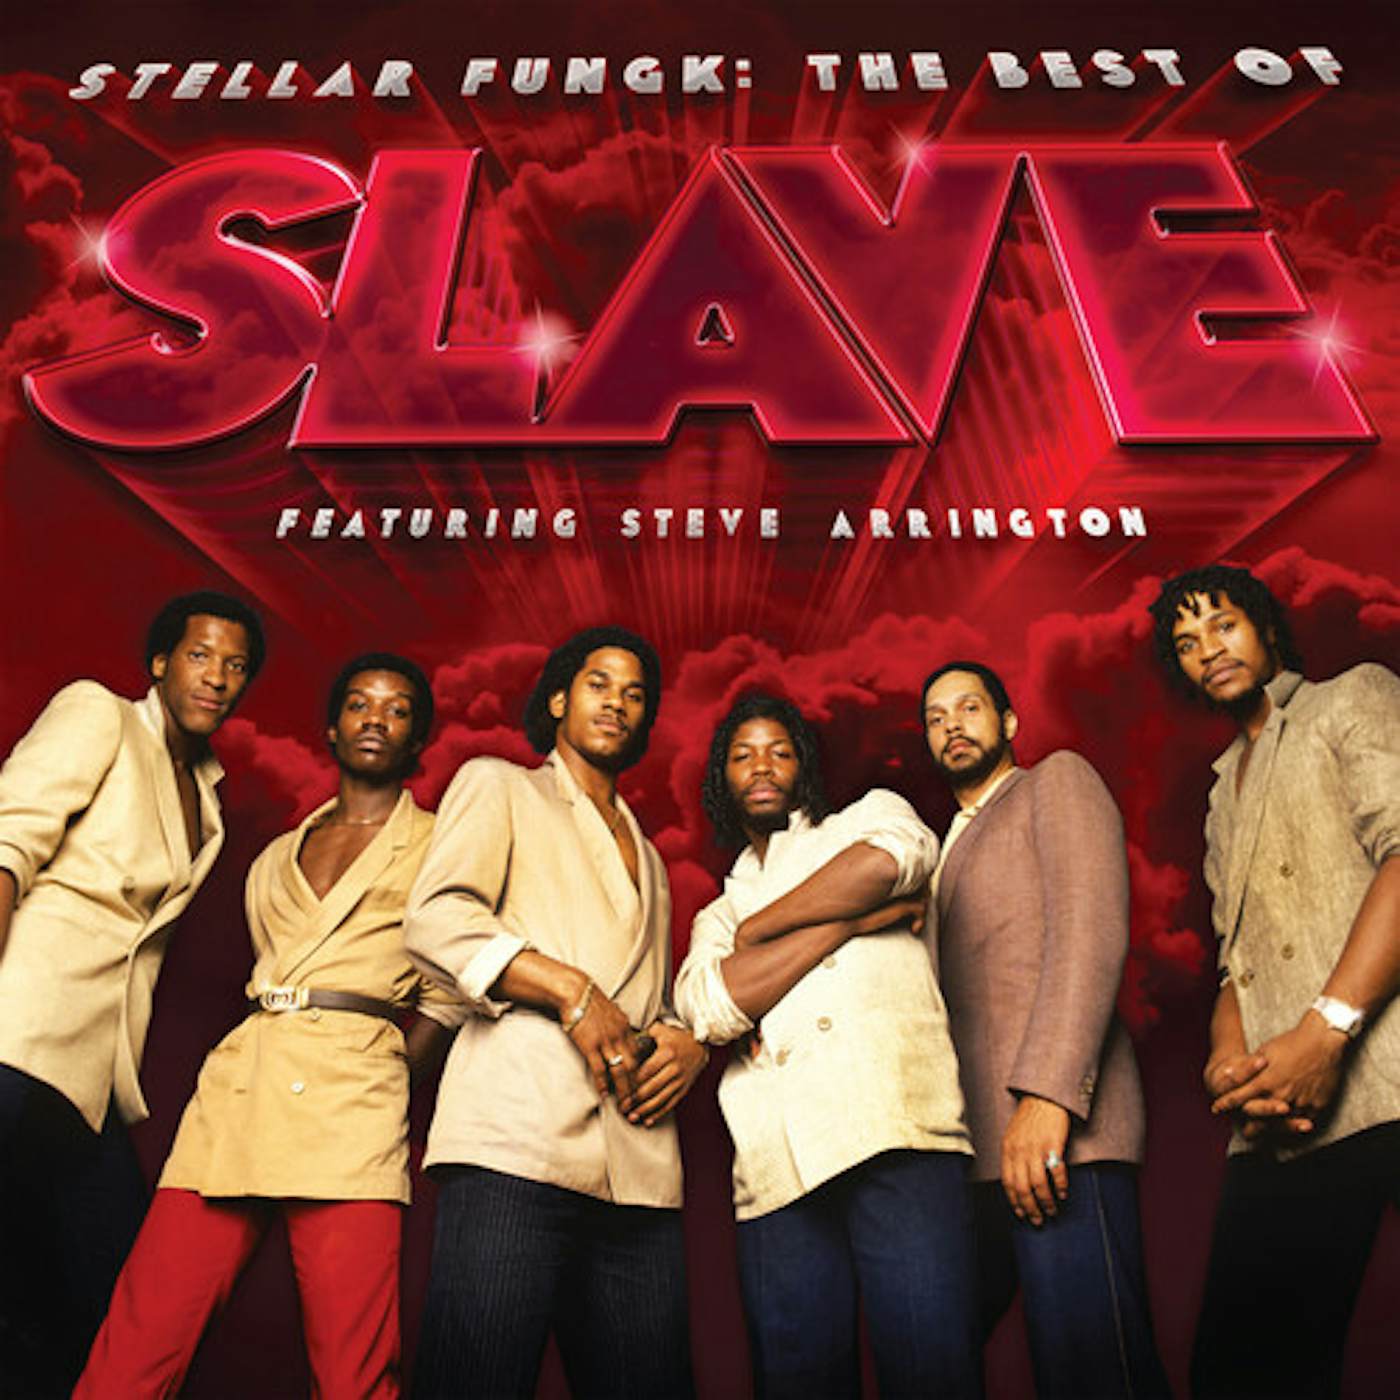 tellar Fungk: The Best of Slave Featuring Steve Arrington  Vinyl Record